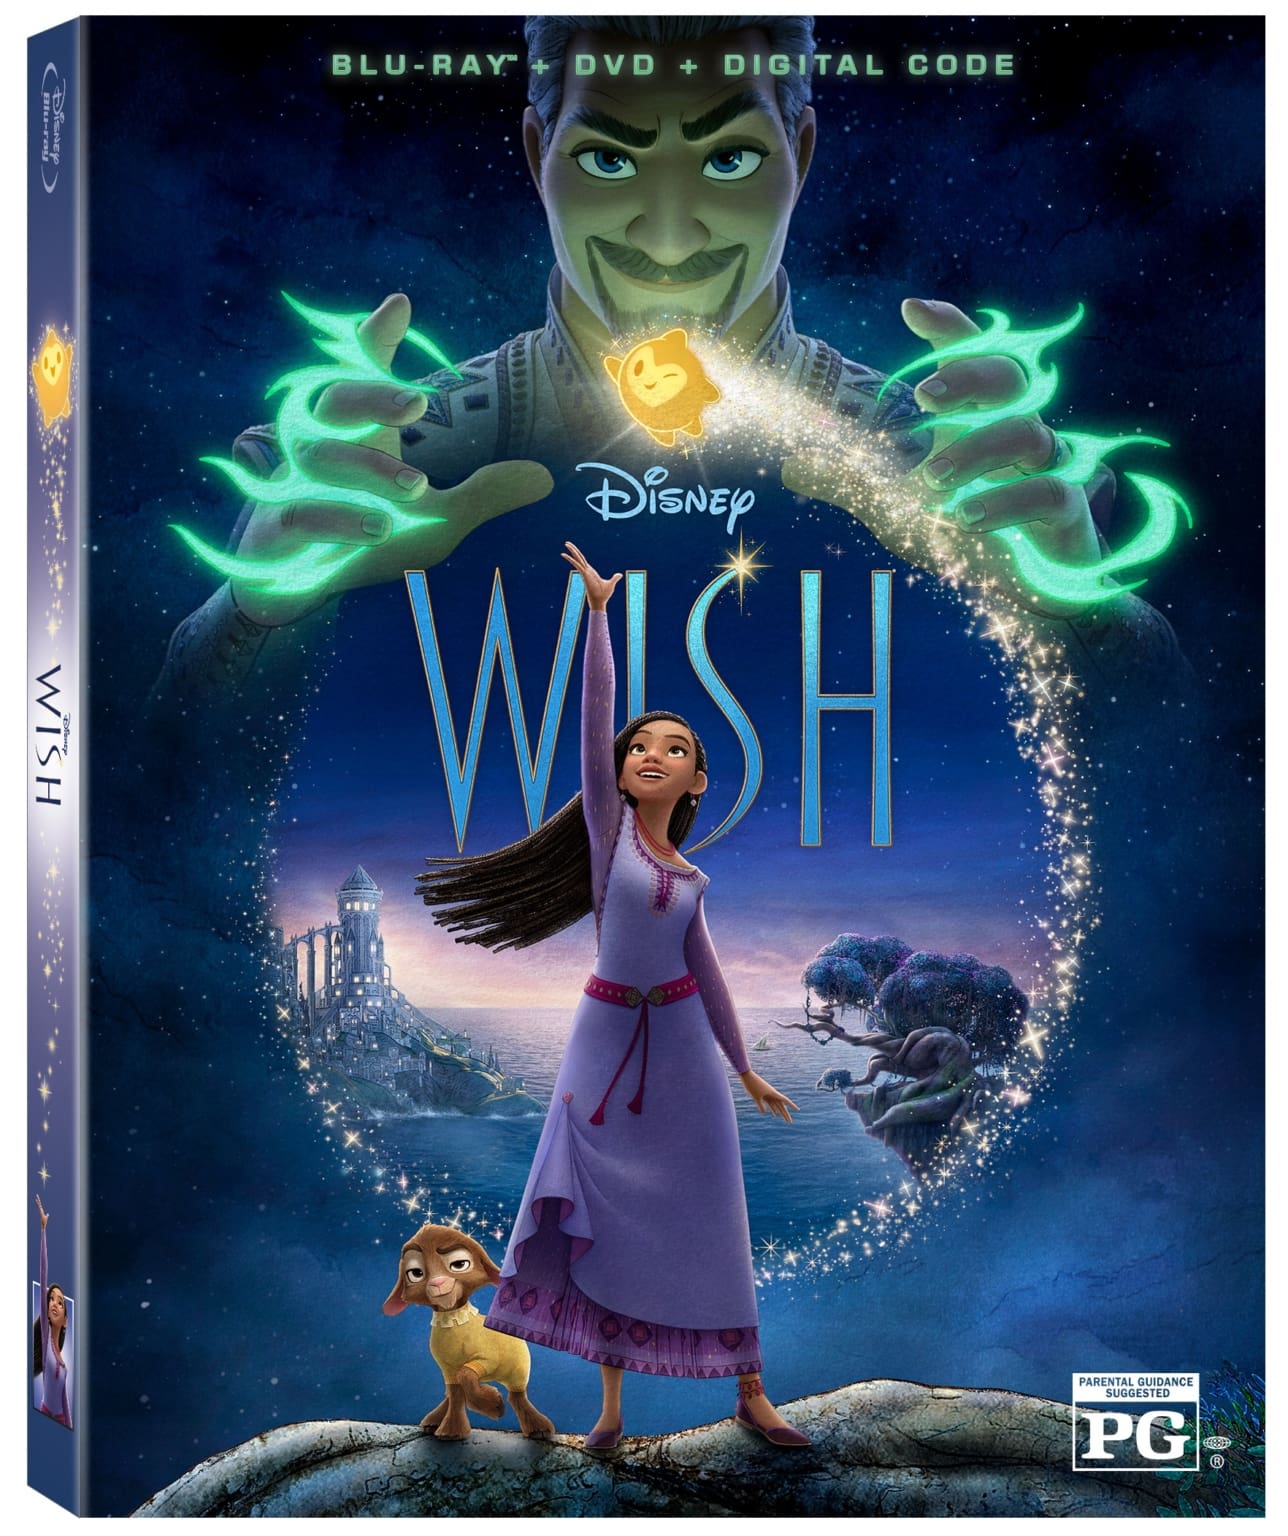 Disney's Wish Bonus Features + Release Date